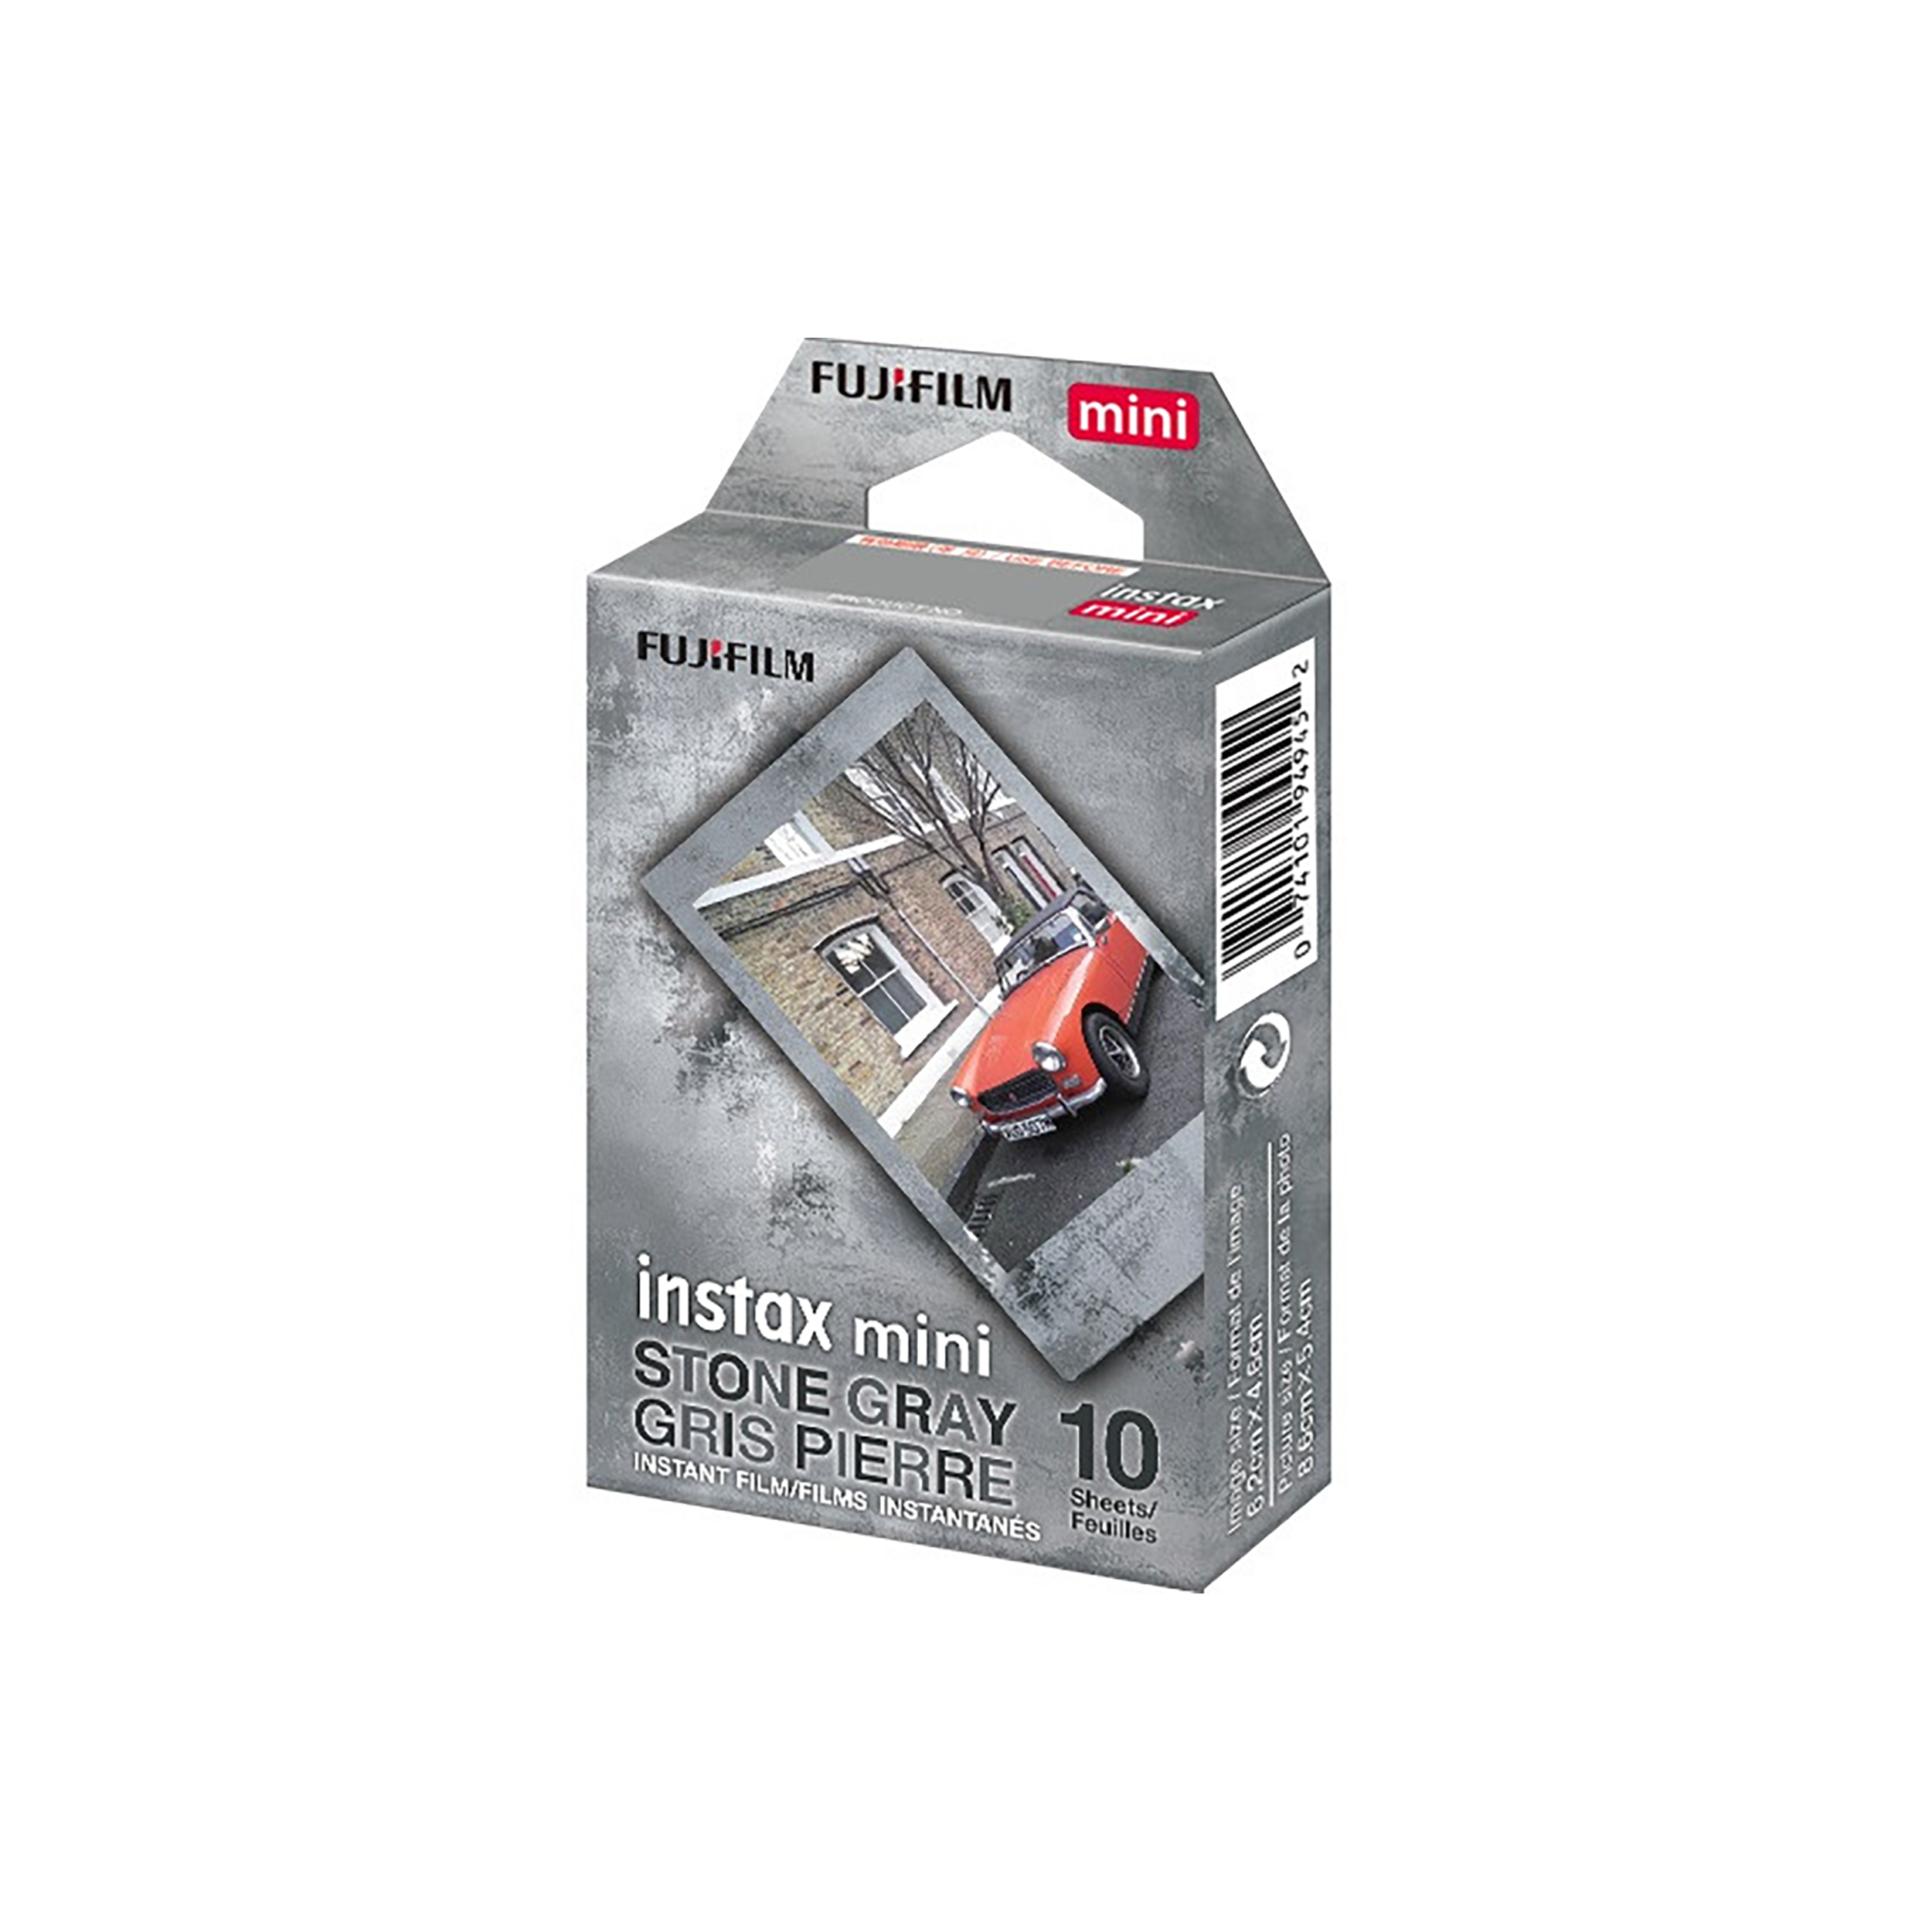 Fujifilm Instax Mini Stone Grey Instant Film (10 feuilles)